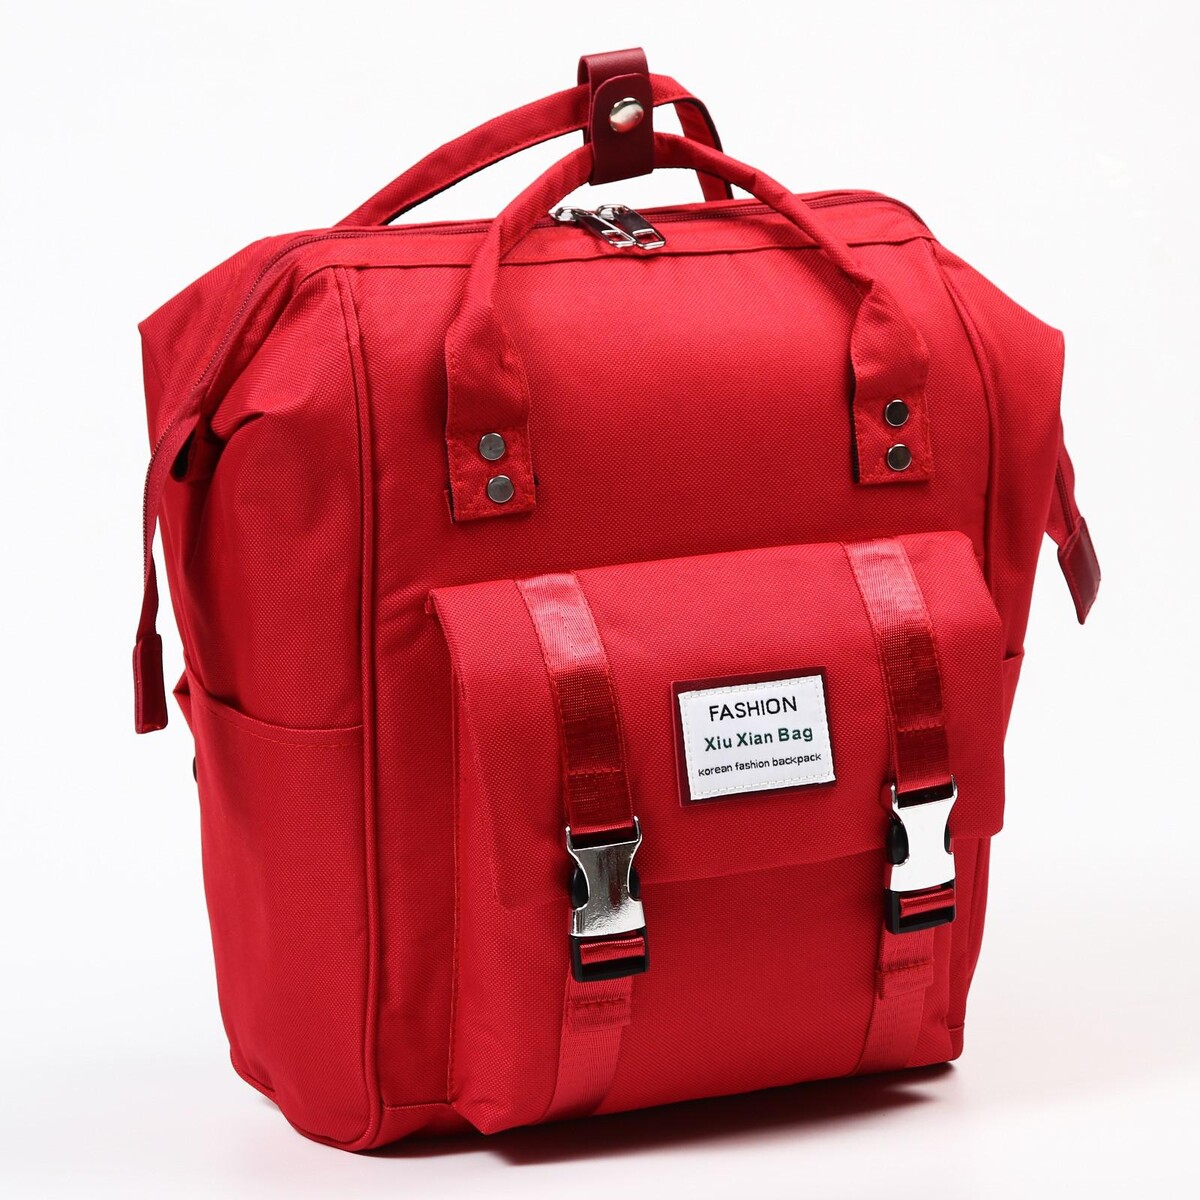 Рюкзак женский с термокарманом, термосумка - портфель, цвет красный рюкзак женский